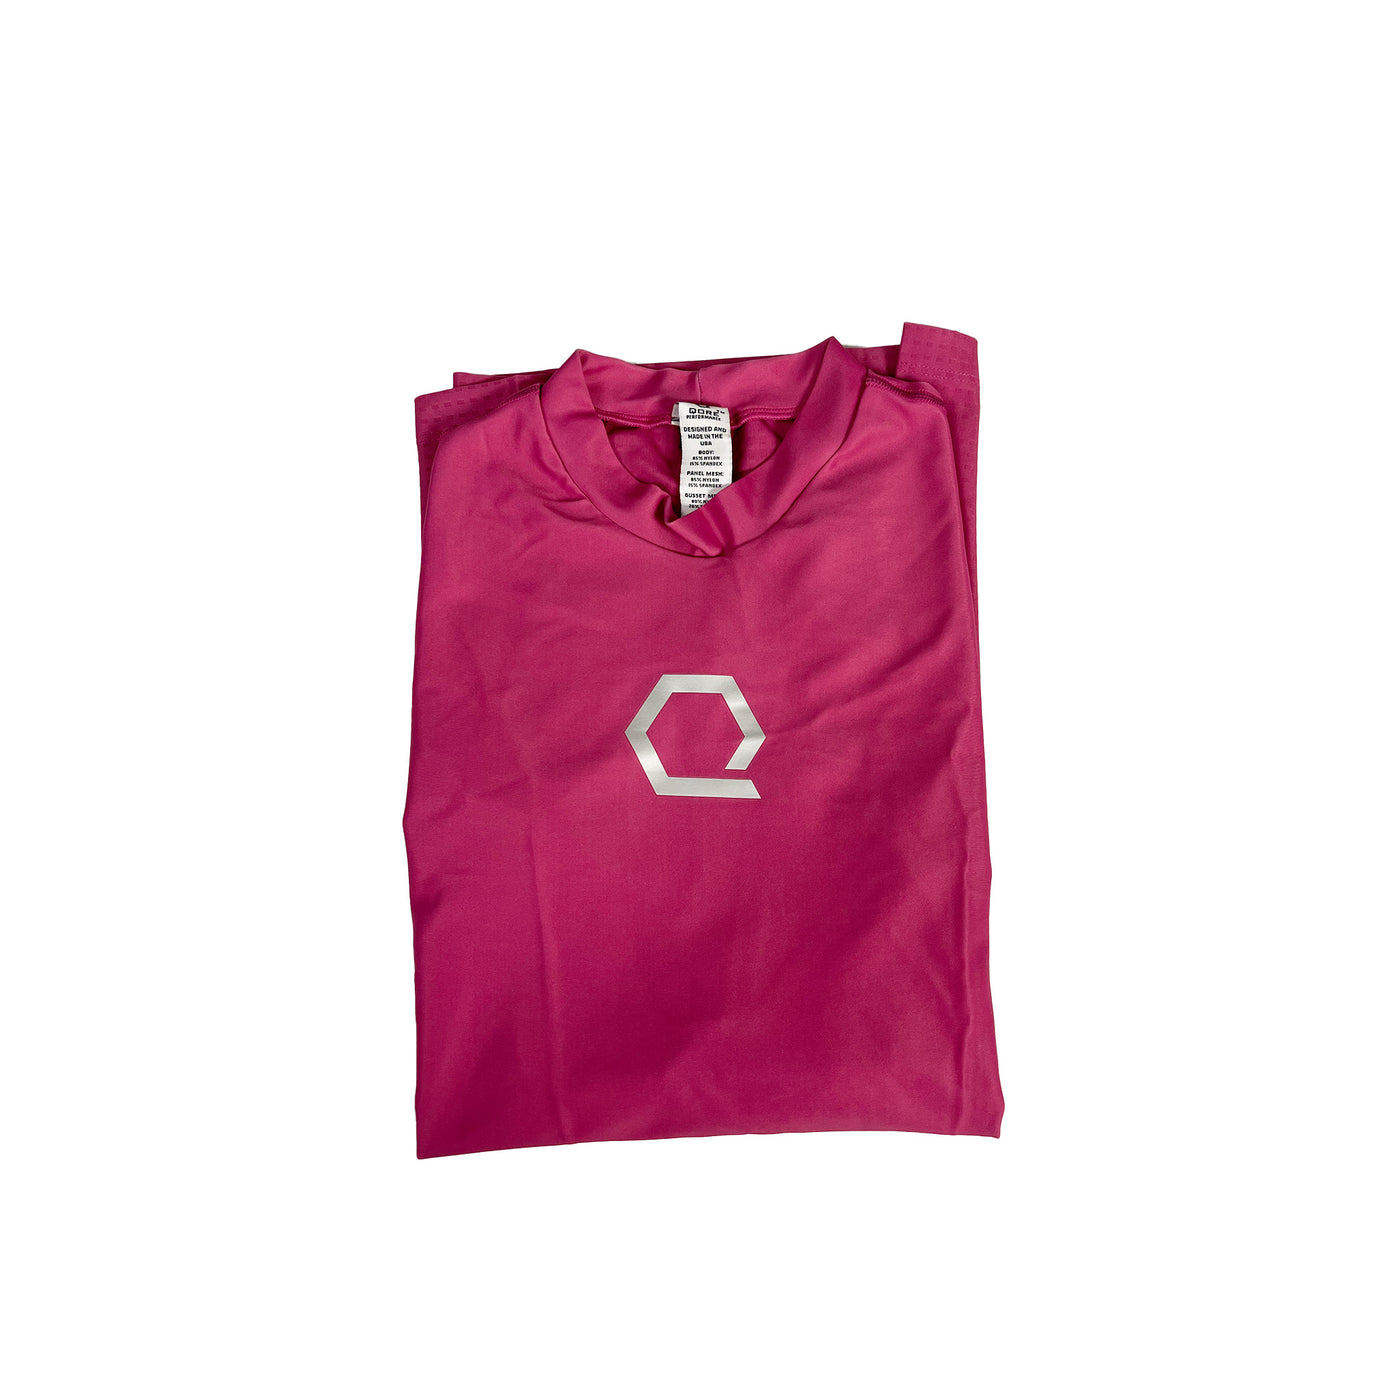 Pink TCCC Shirt (Short/Long Sleeve)